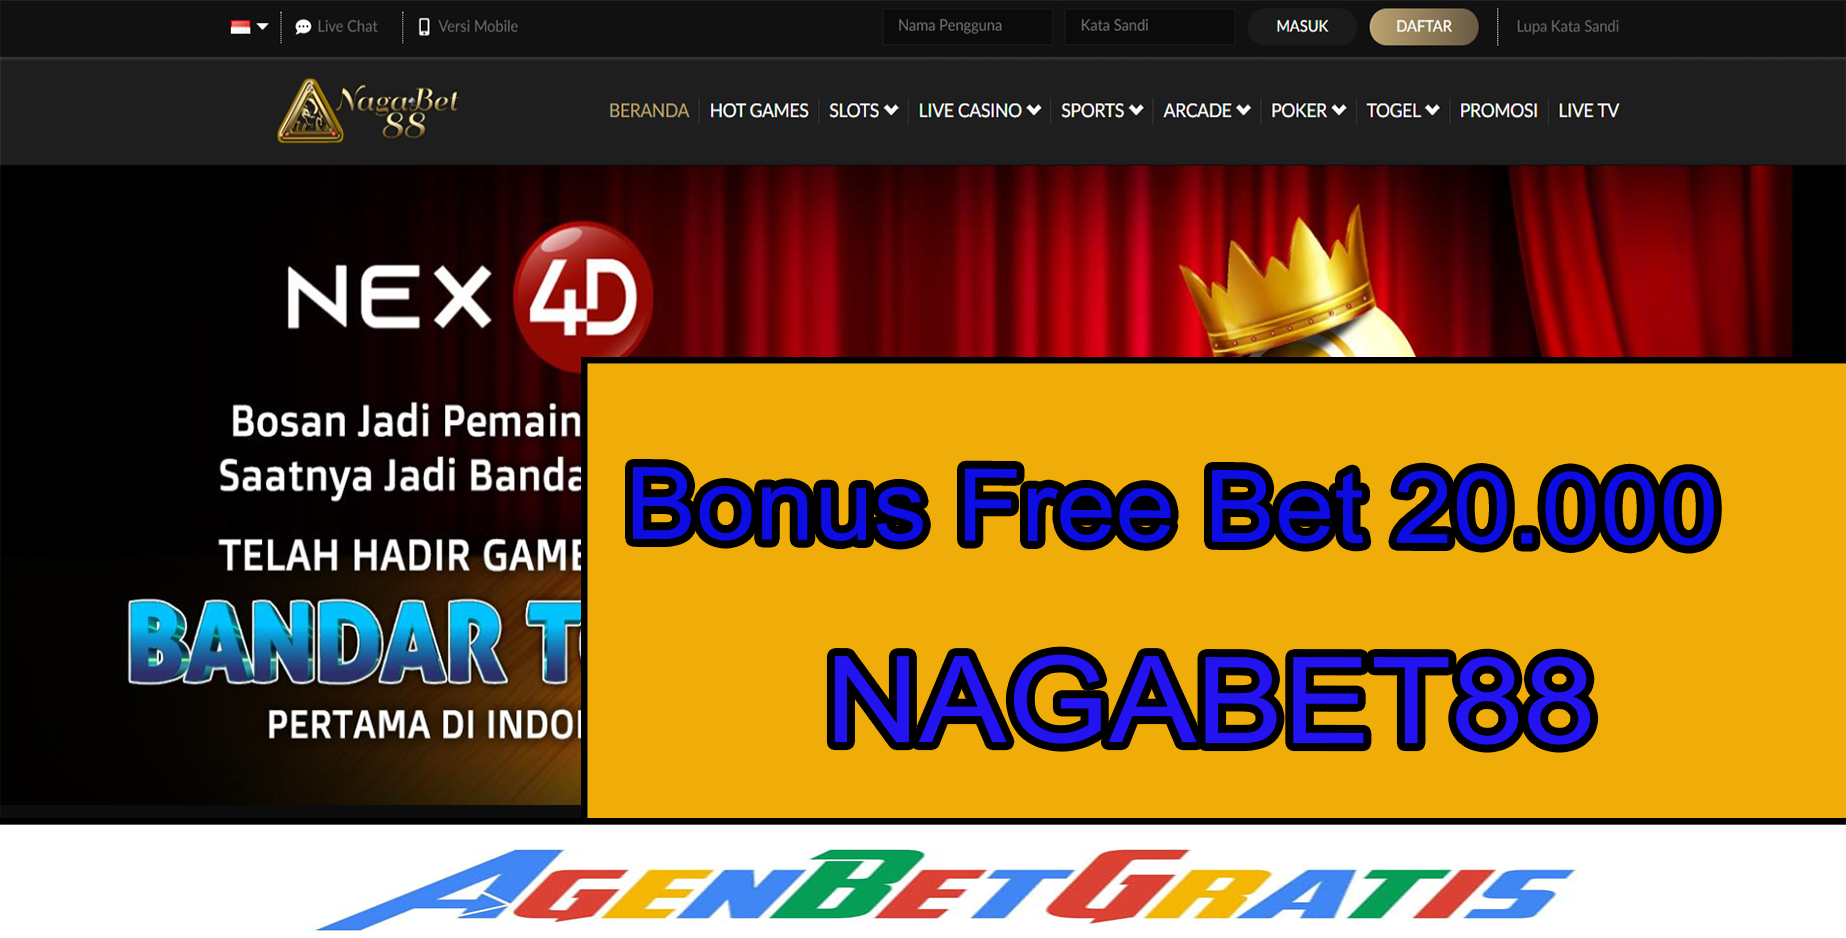 NAGABET88 - Bonus FreeBet 20.000